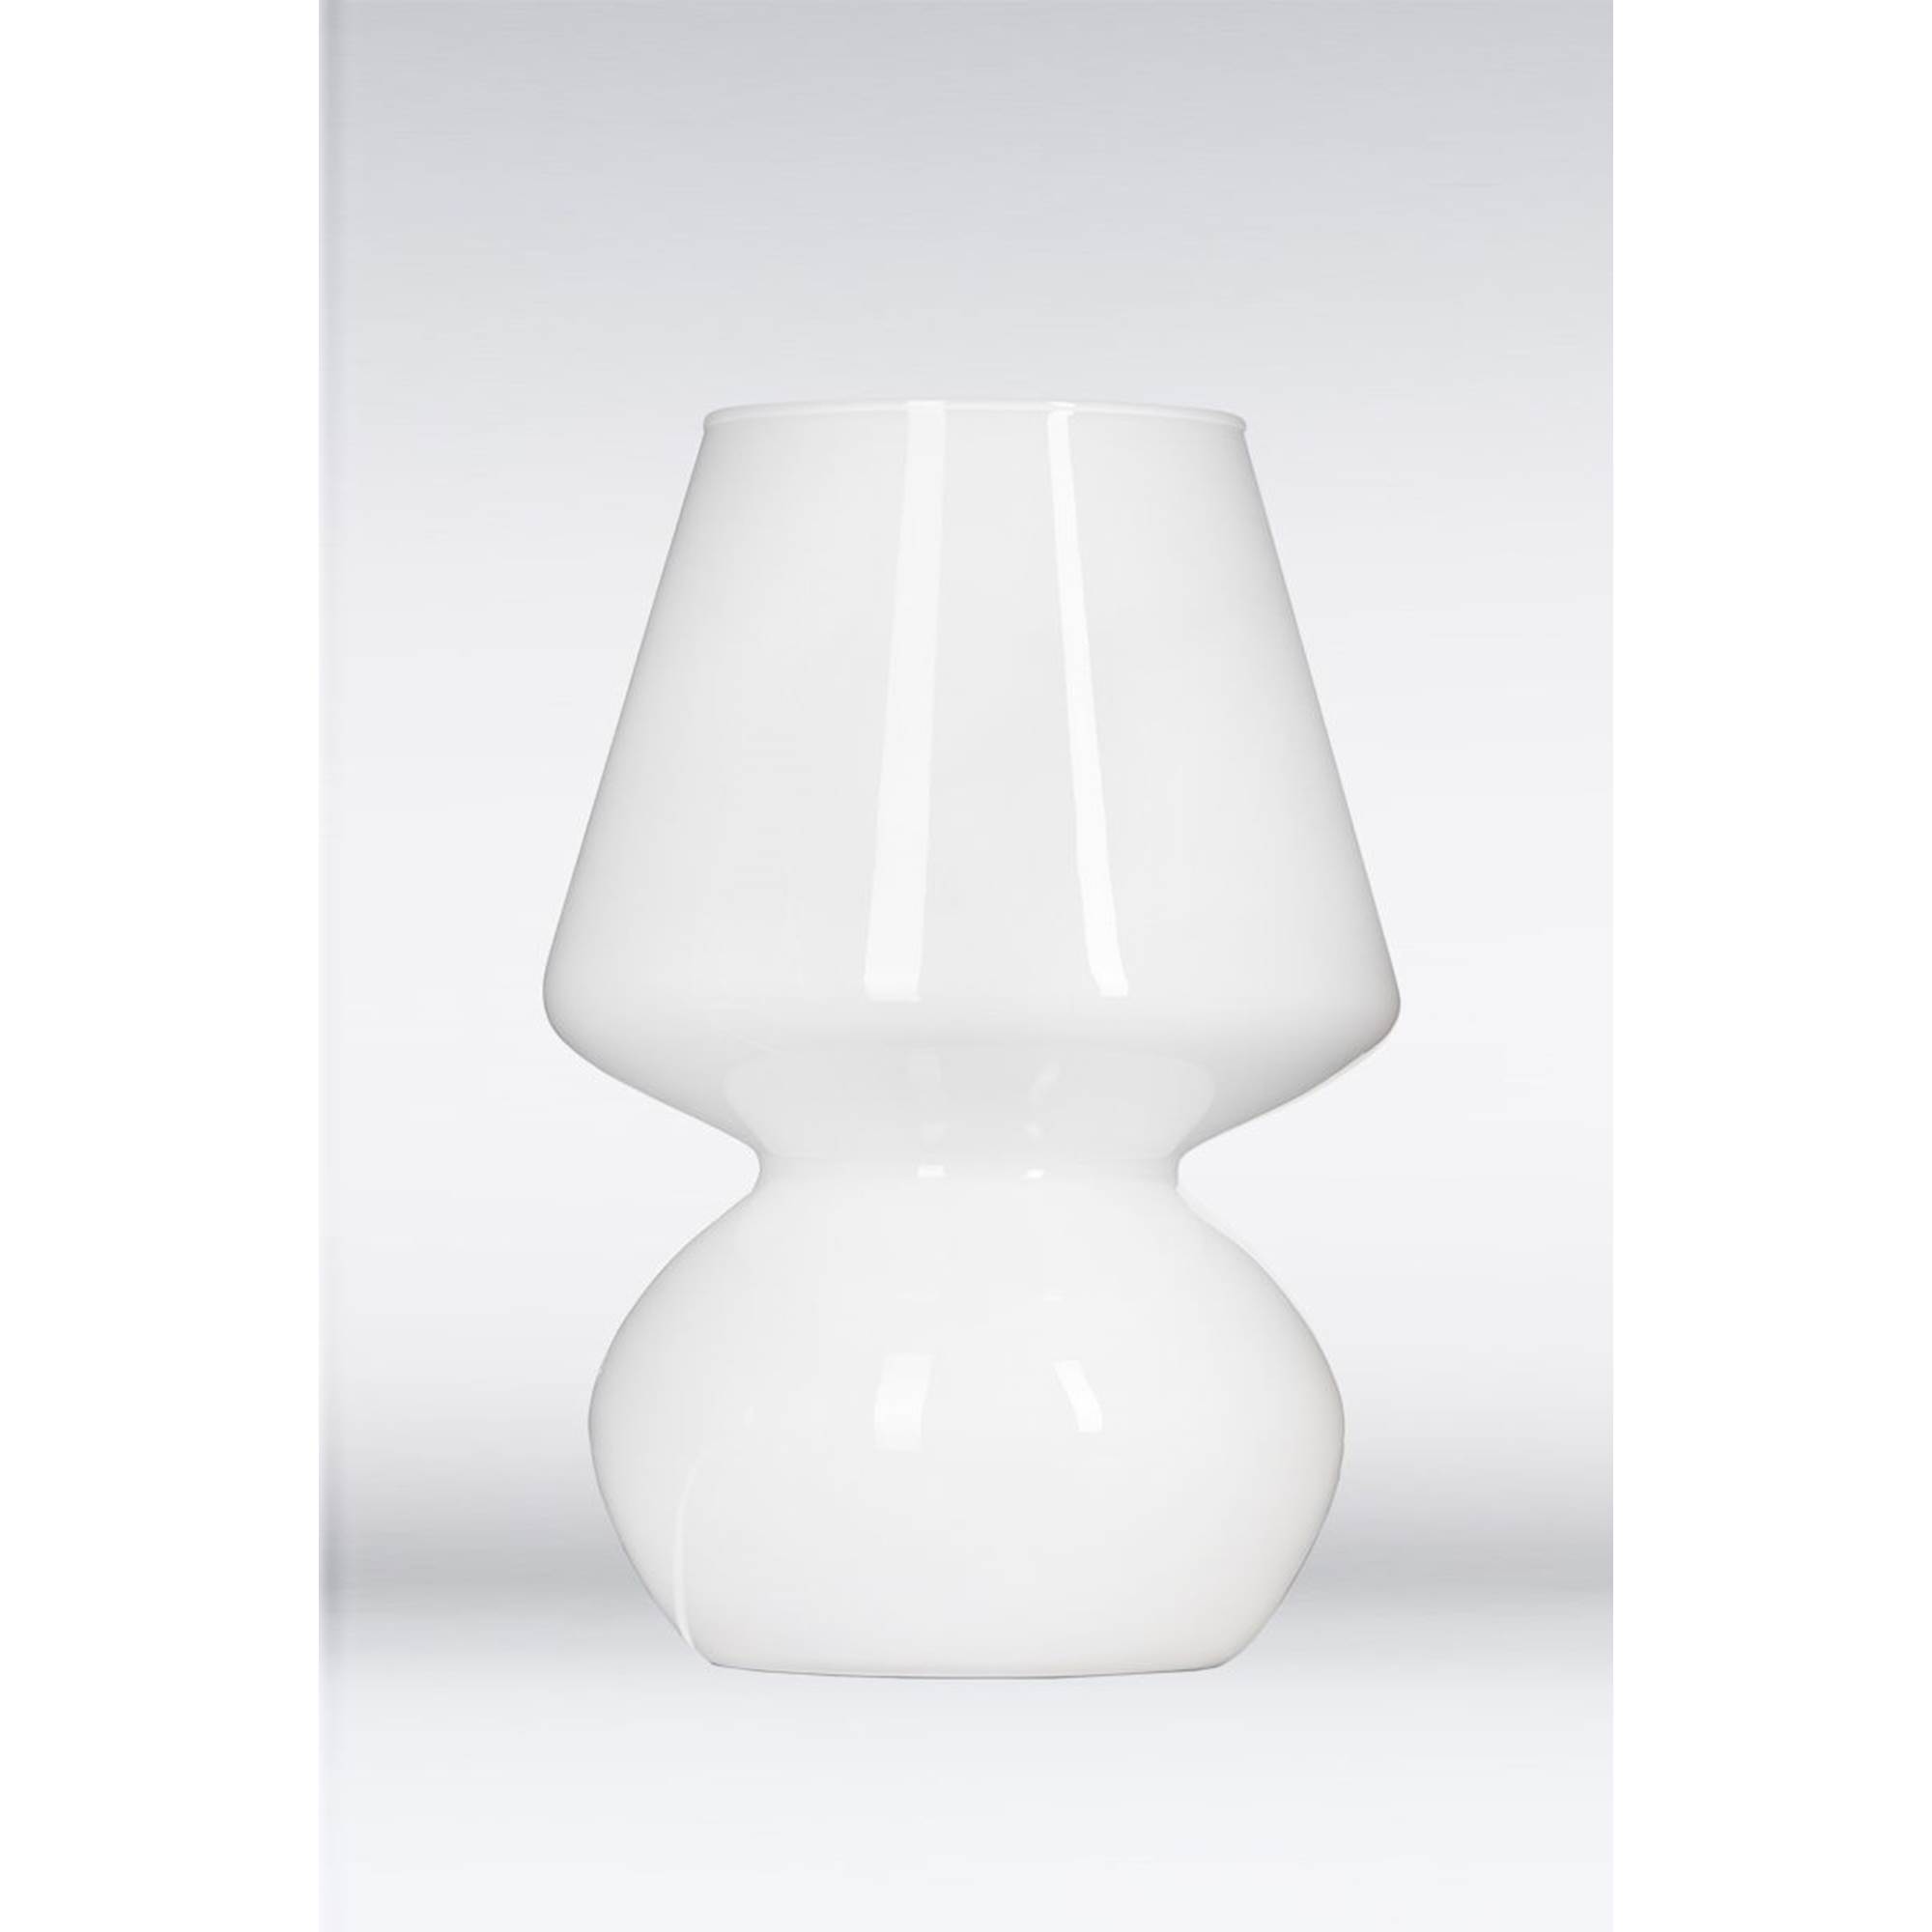 4 Concepts Como White Glass Table Lamp, Valencia Glass Table Lamp